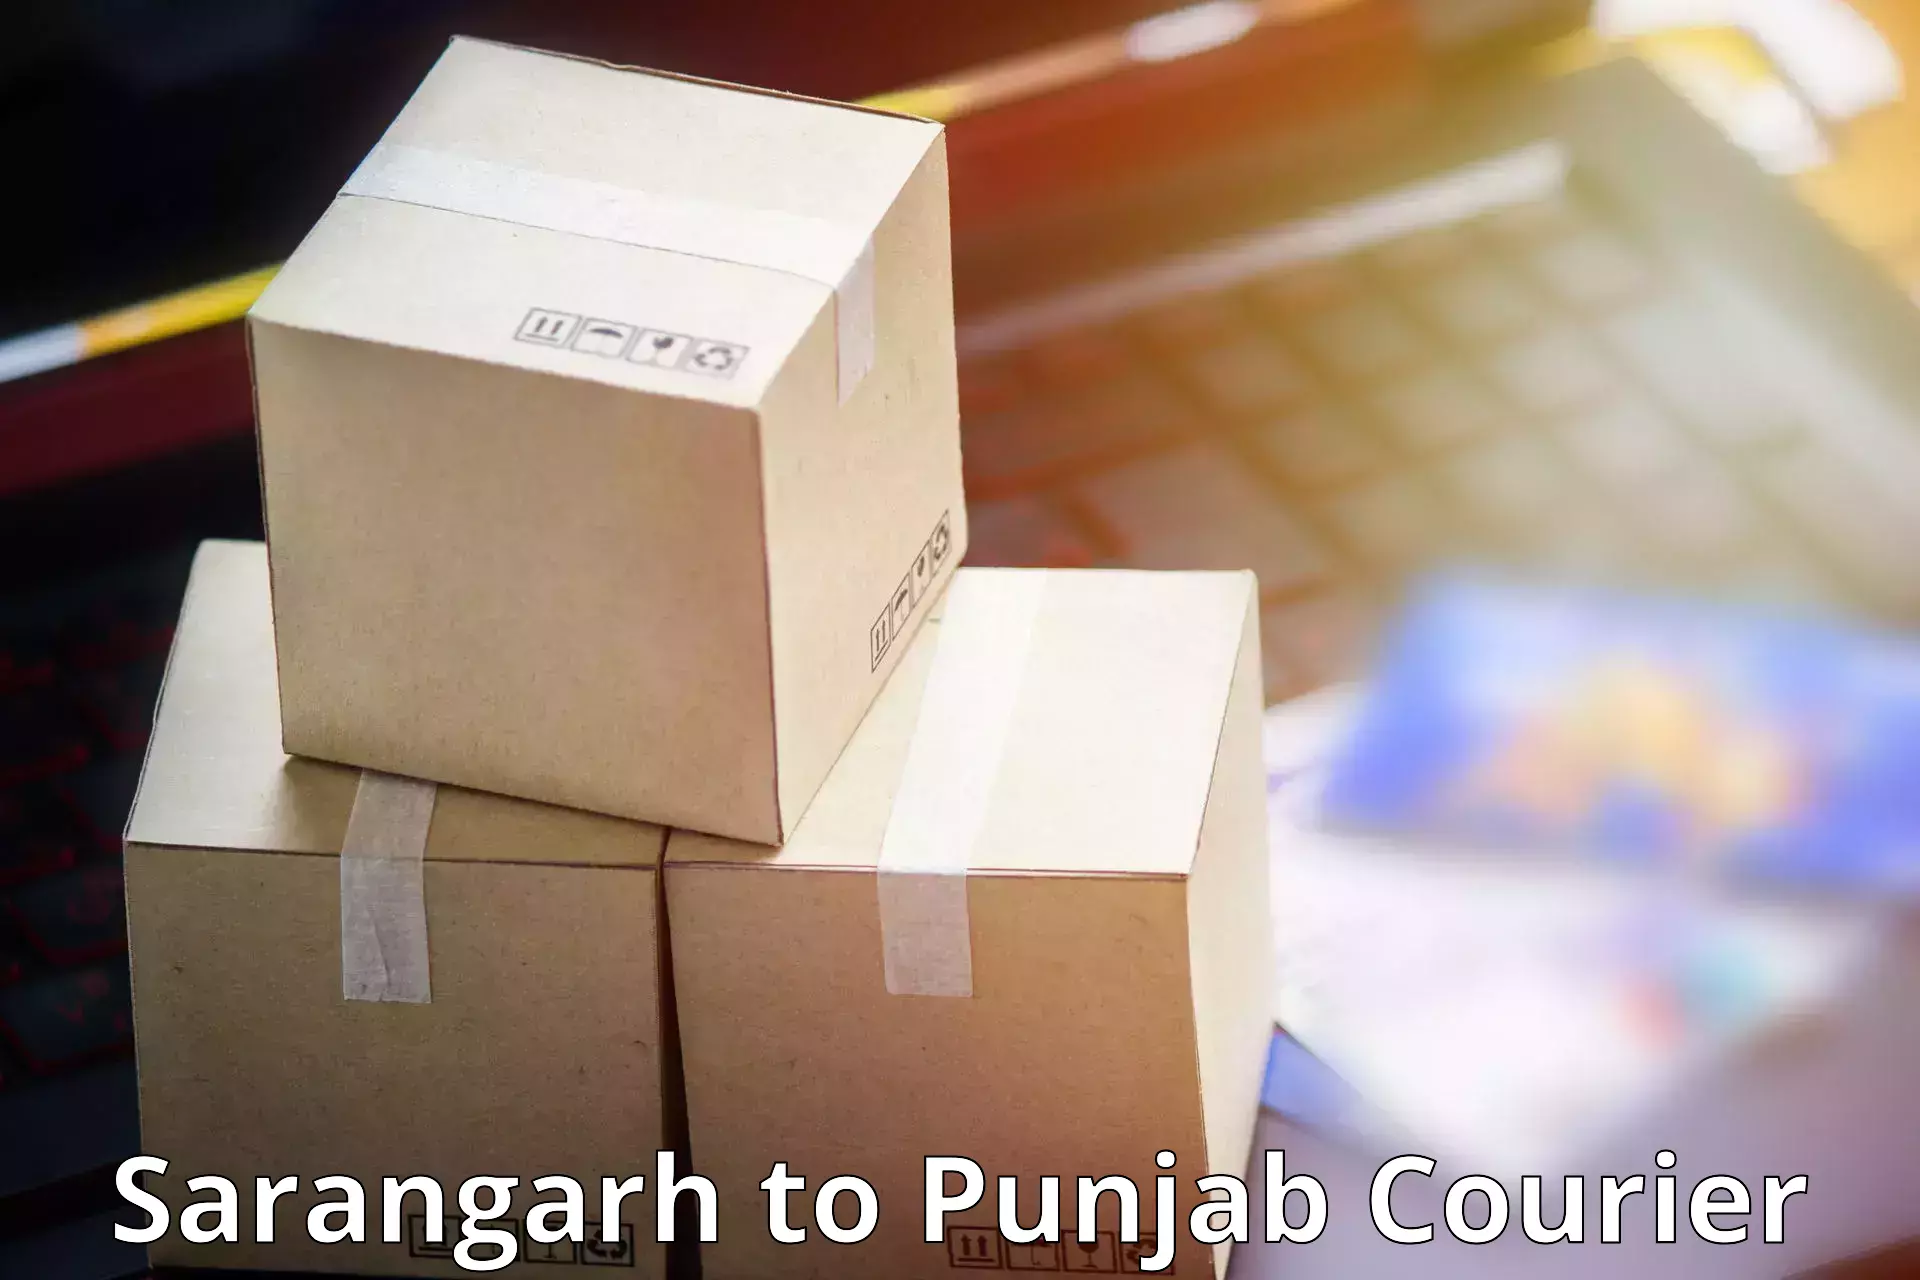 Reliable delivery network Sarangarh to Zirakpur